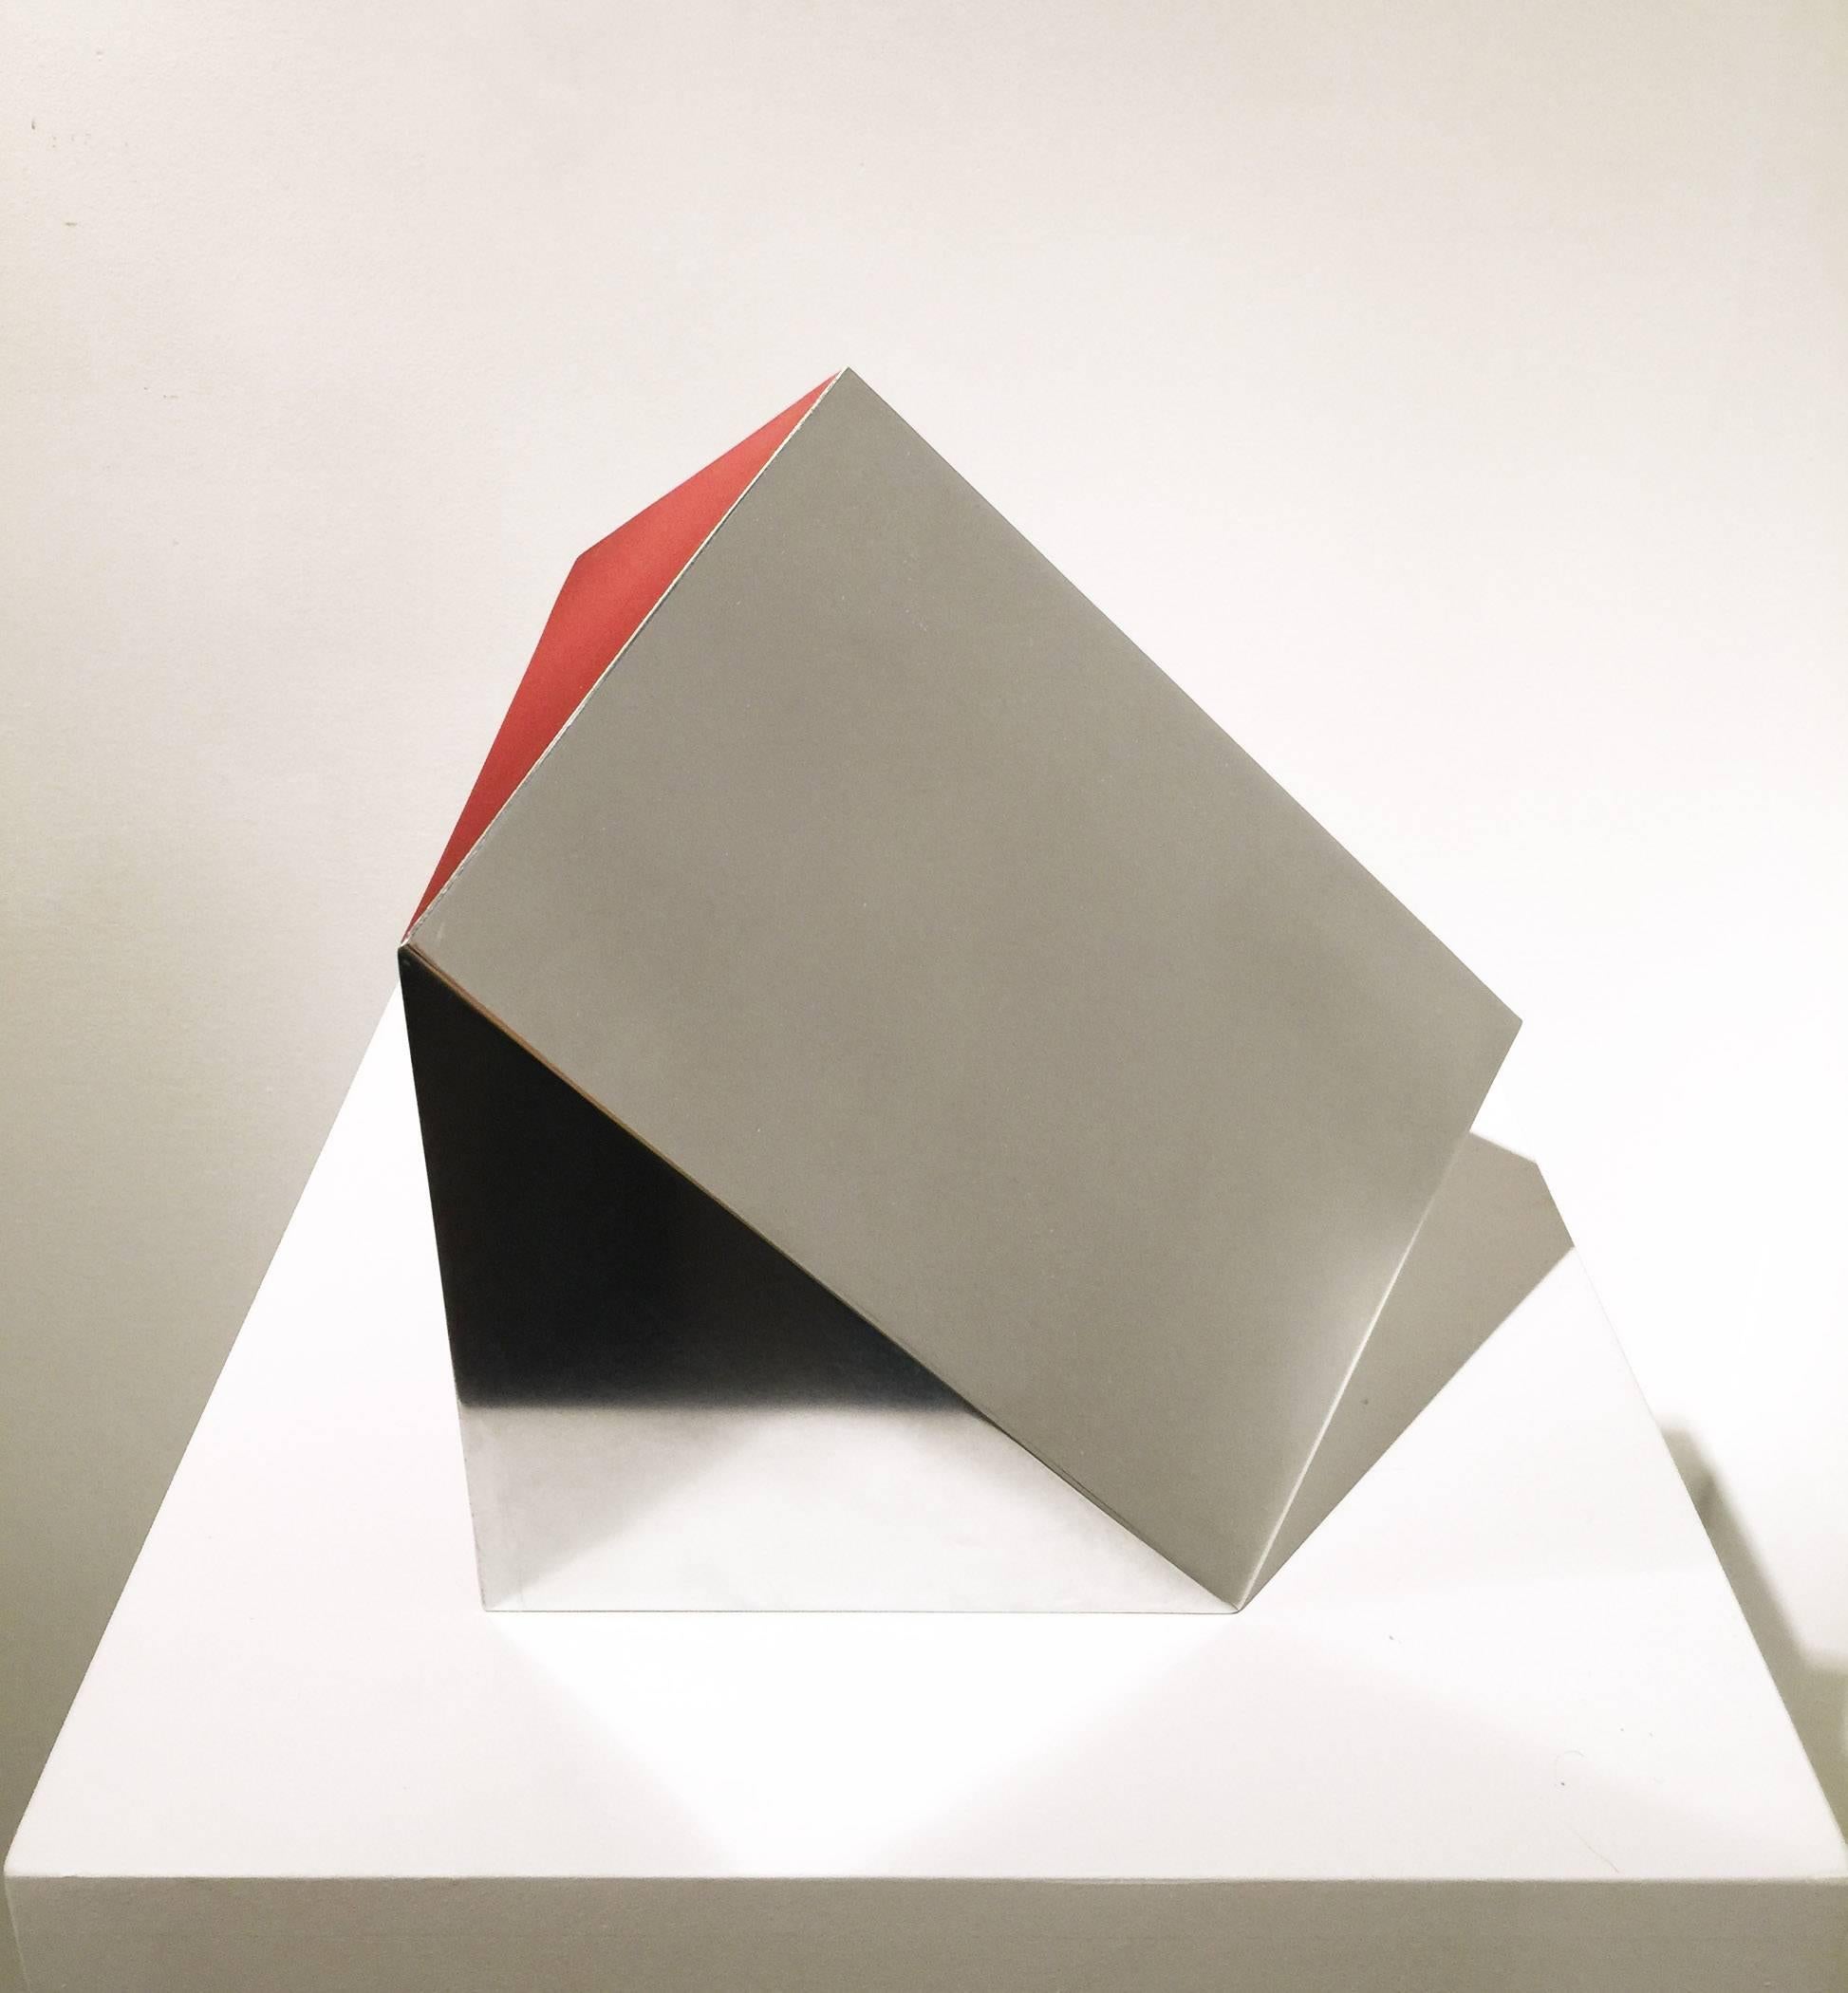 Cube House - Sculpture by Arno Kortschot